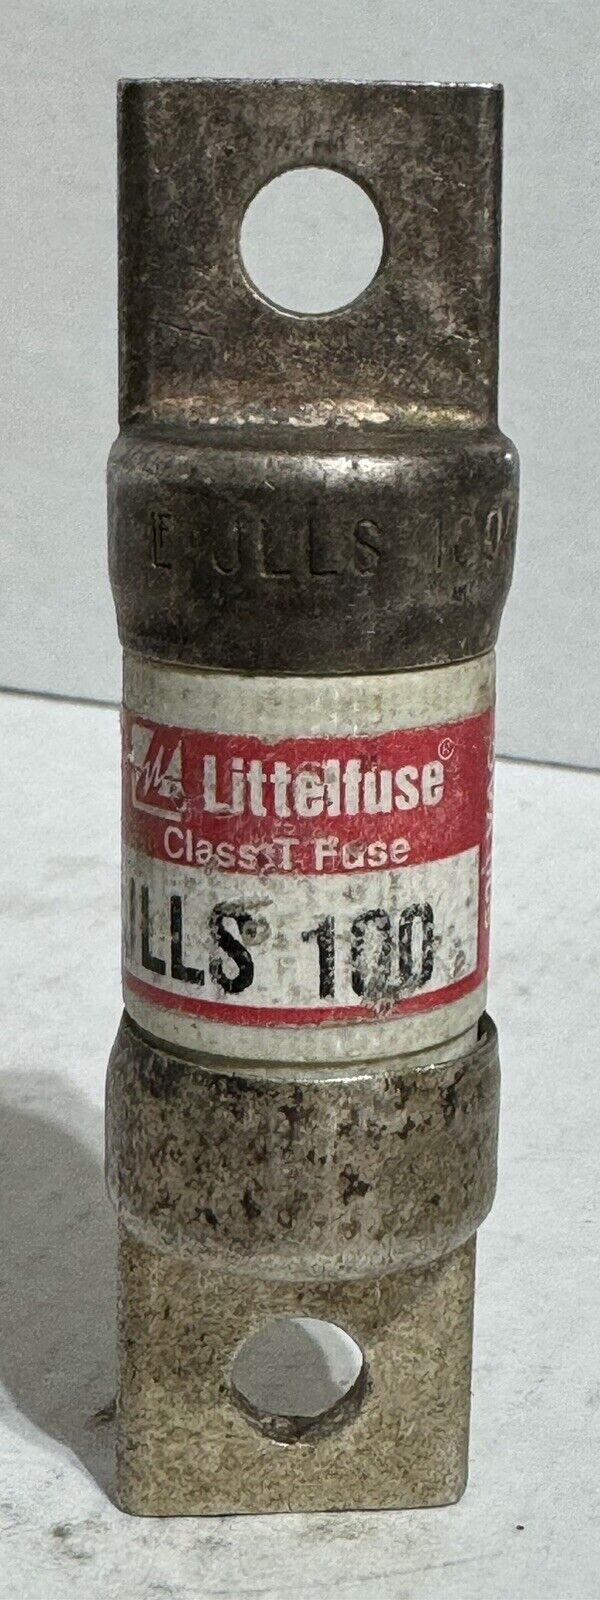 Littlefuse JLLS 100A Class T Fuse - 100 amps / 600 volts